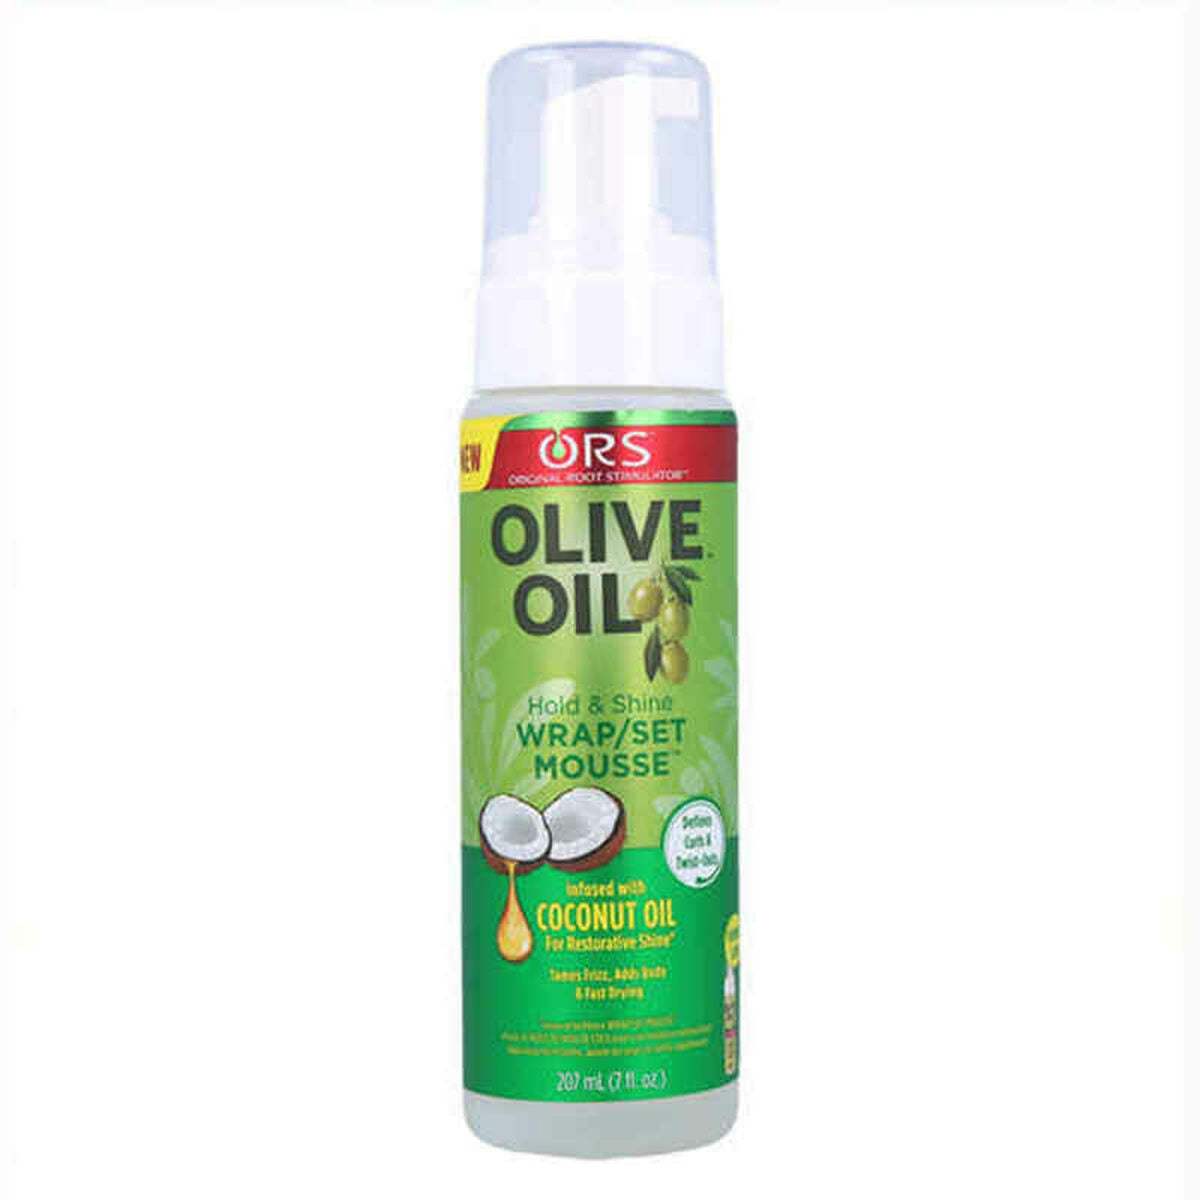 Hidratante Ors Olive Oil Wrap Ors (207 ml)